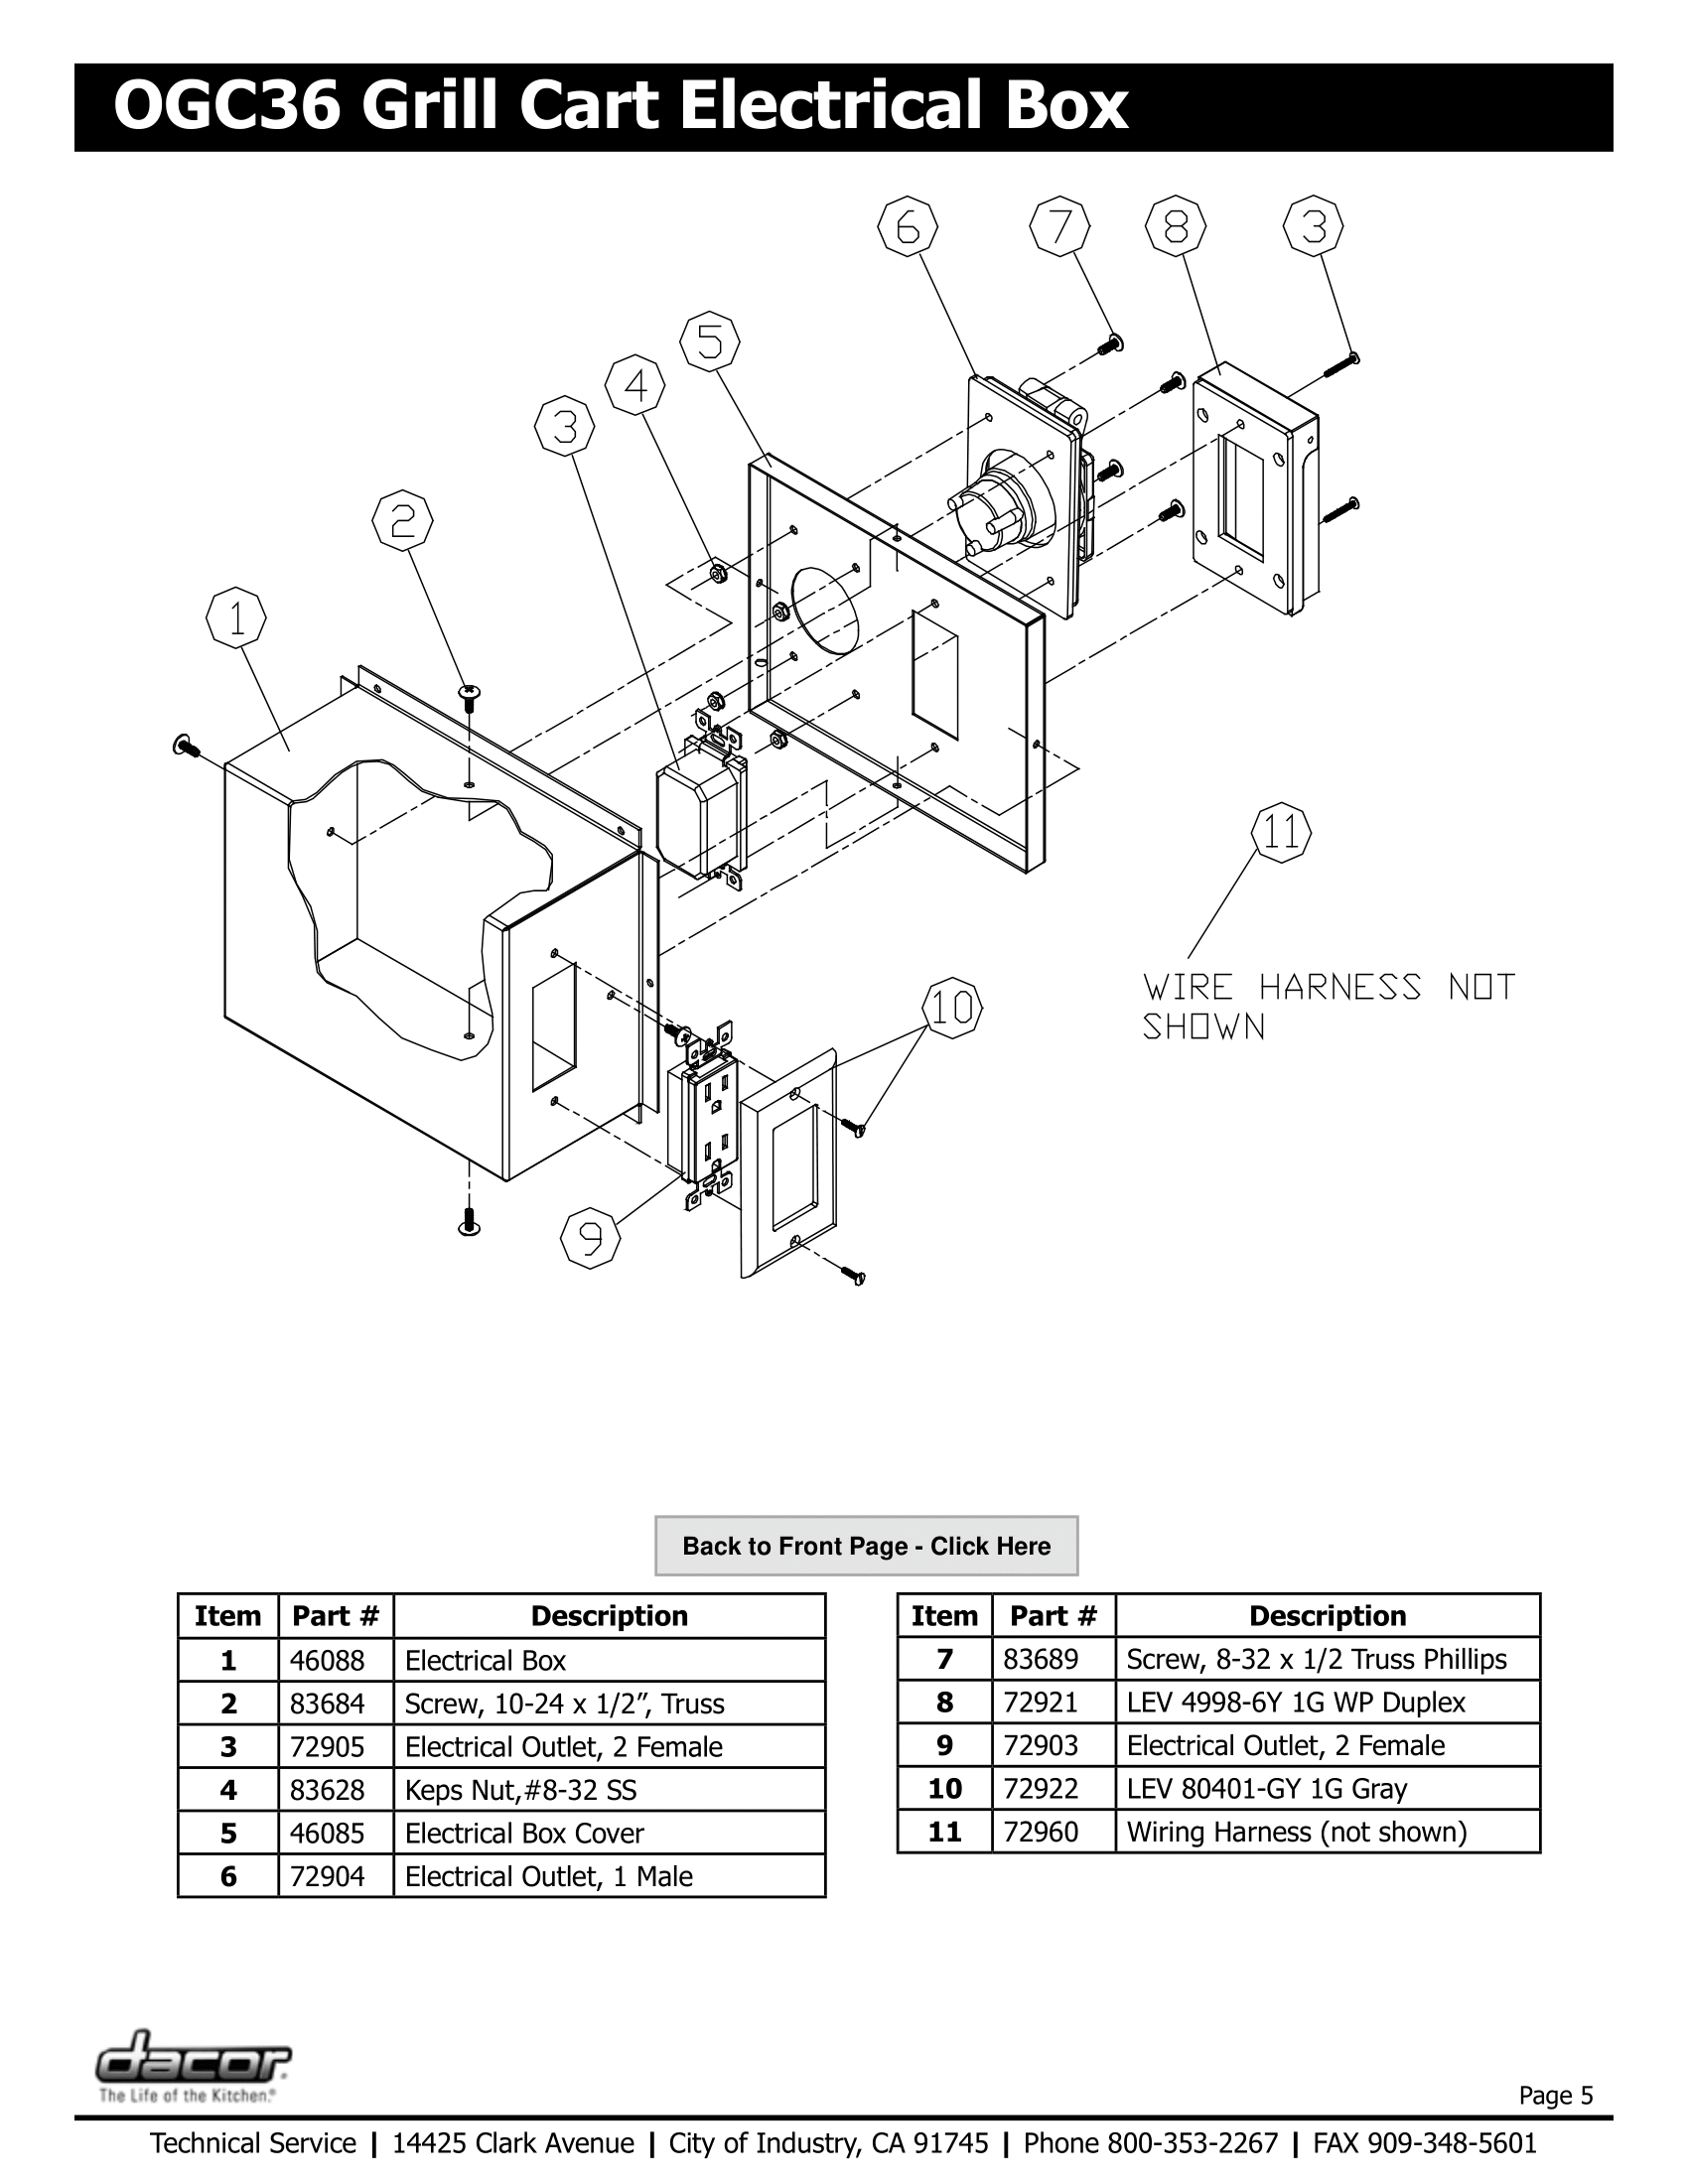 Dacor OGC36 Electrical Box Schematic